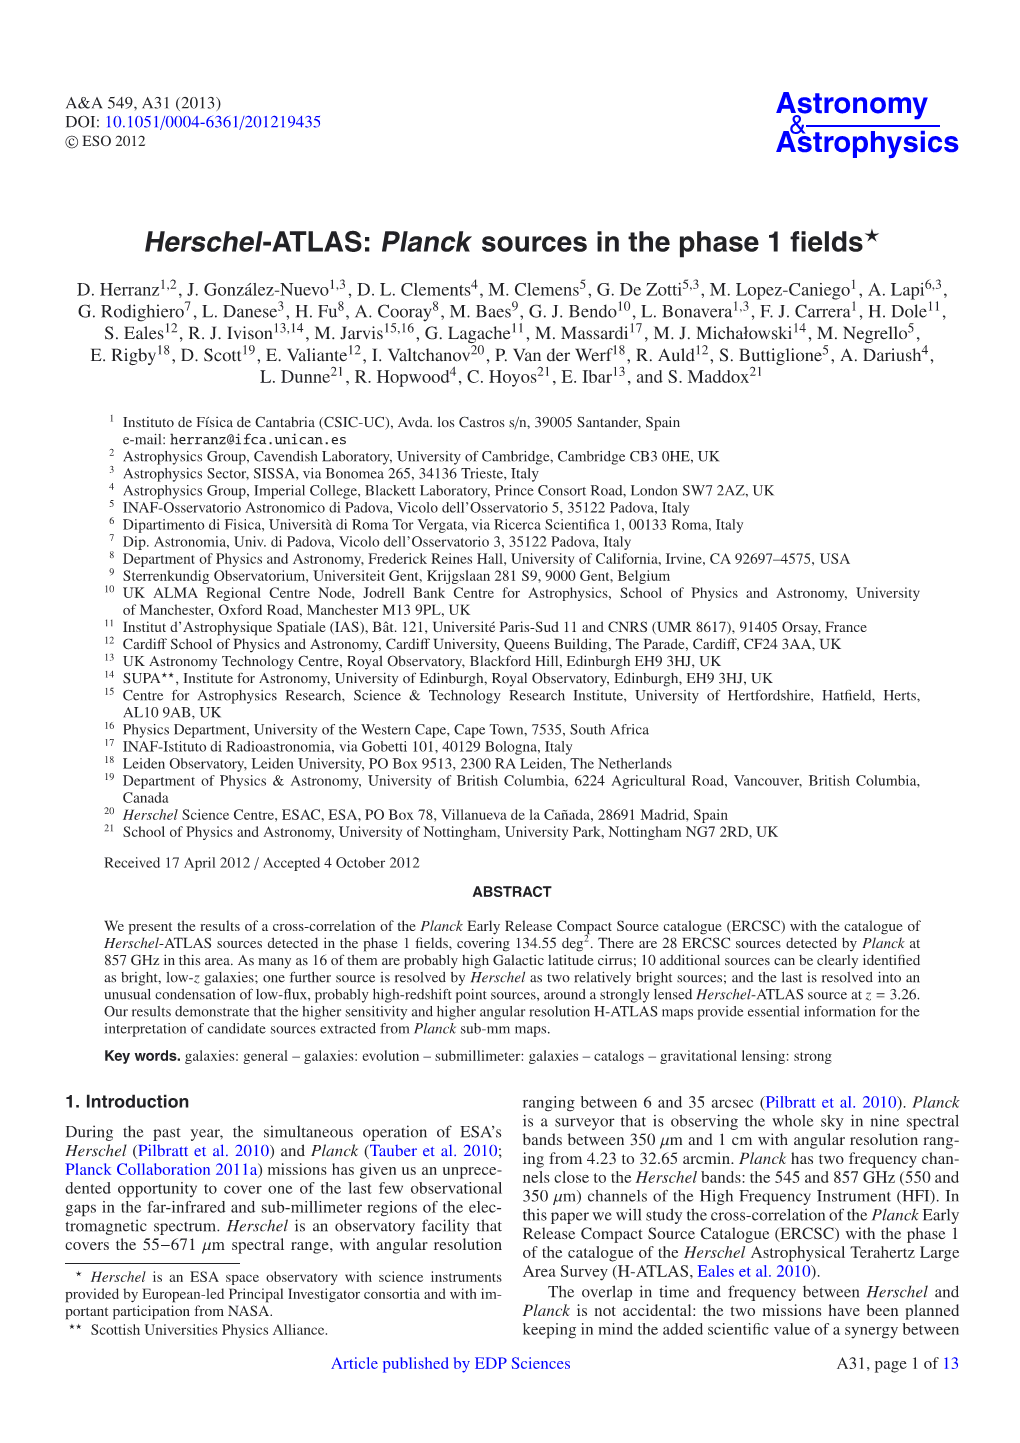 Herschel-ATLAS: Planck Sources in the Phase 1 ﬁelds